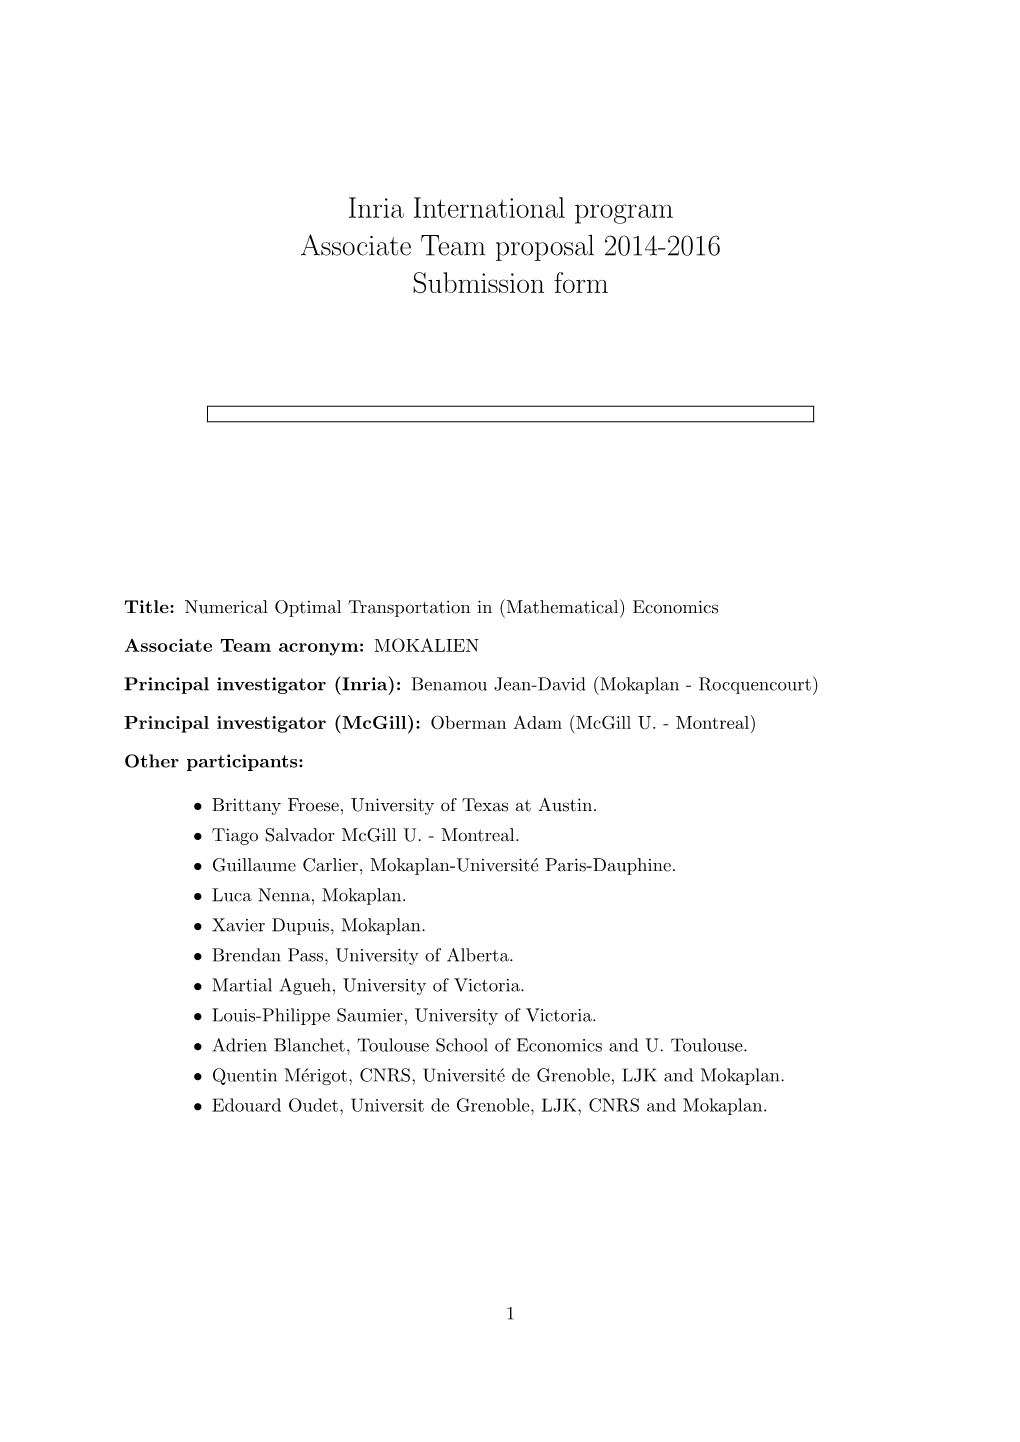 Inria International Program Associate Team Proposal 2014-2016 Submission Form